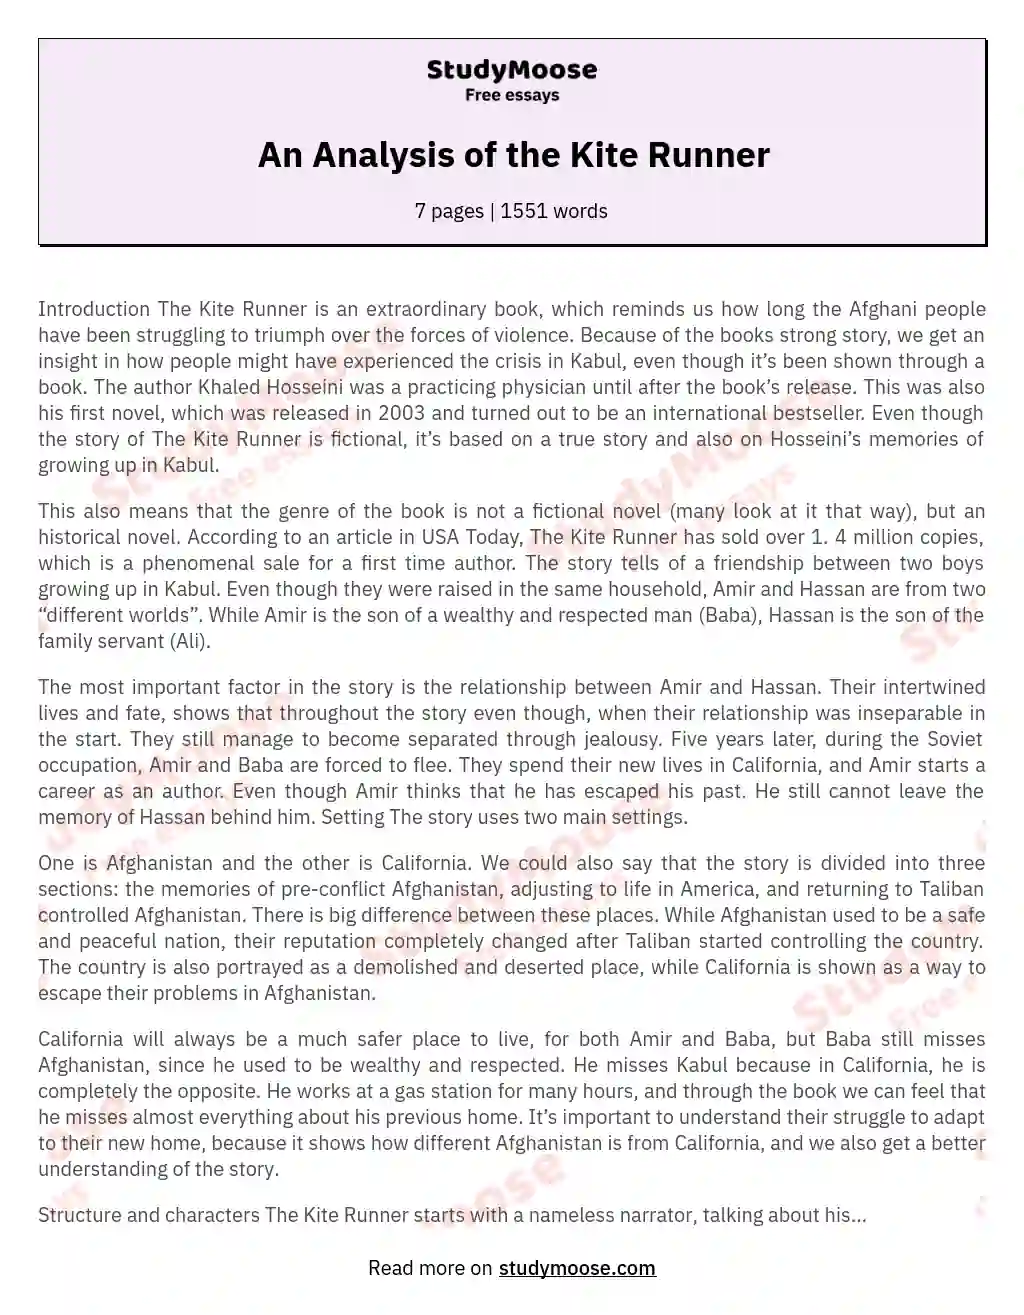 An Analysis of the Kite Runner essay